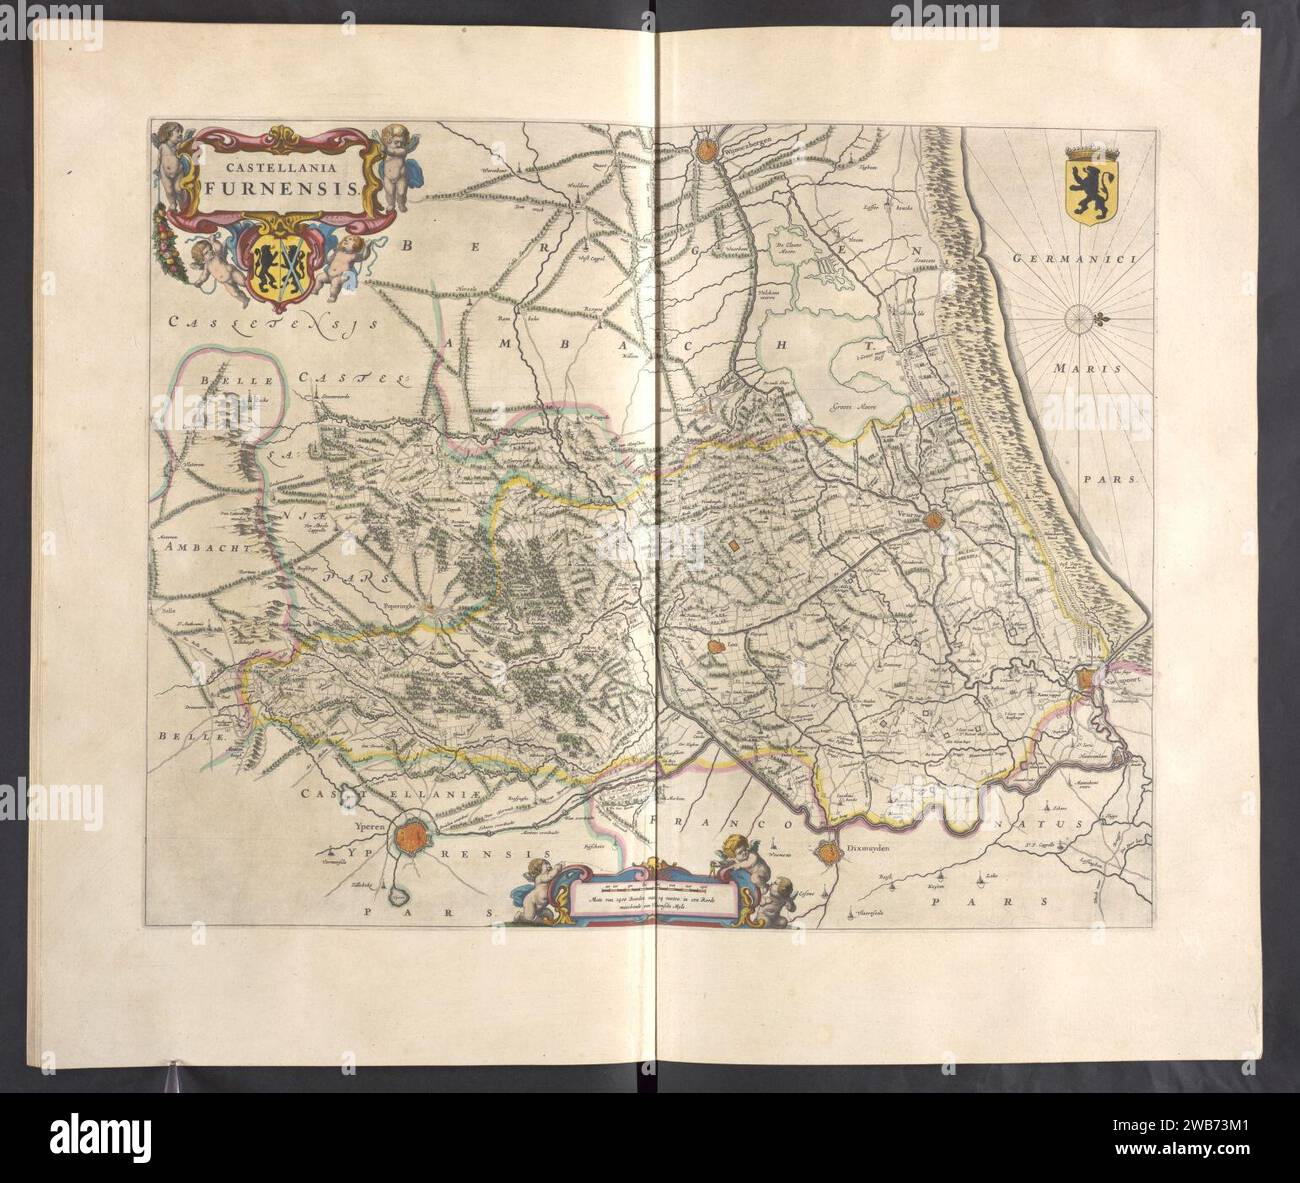 Castellania Furnensis - Atlas Maior, vol 4, map 20 - Joan Blaeu, 1667 Stock Photo